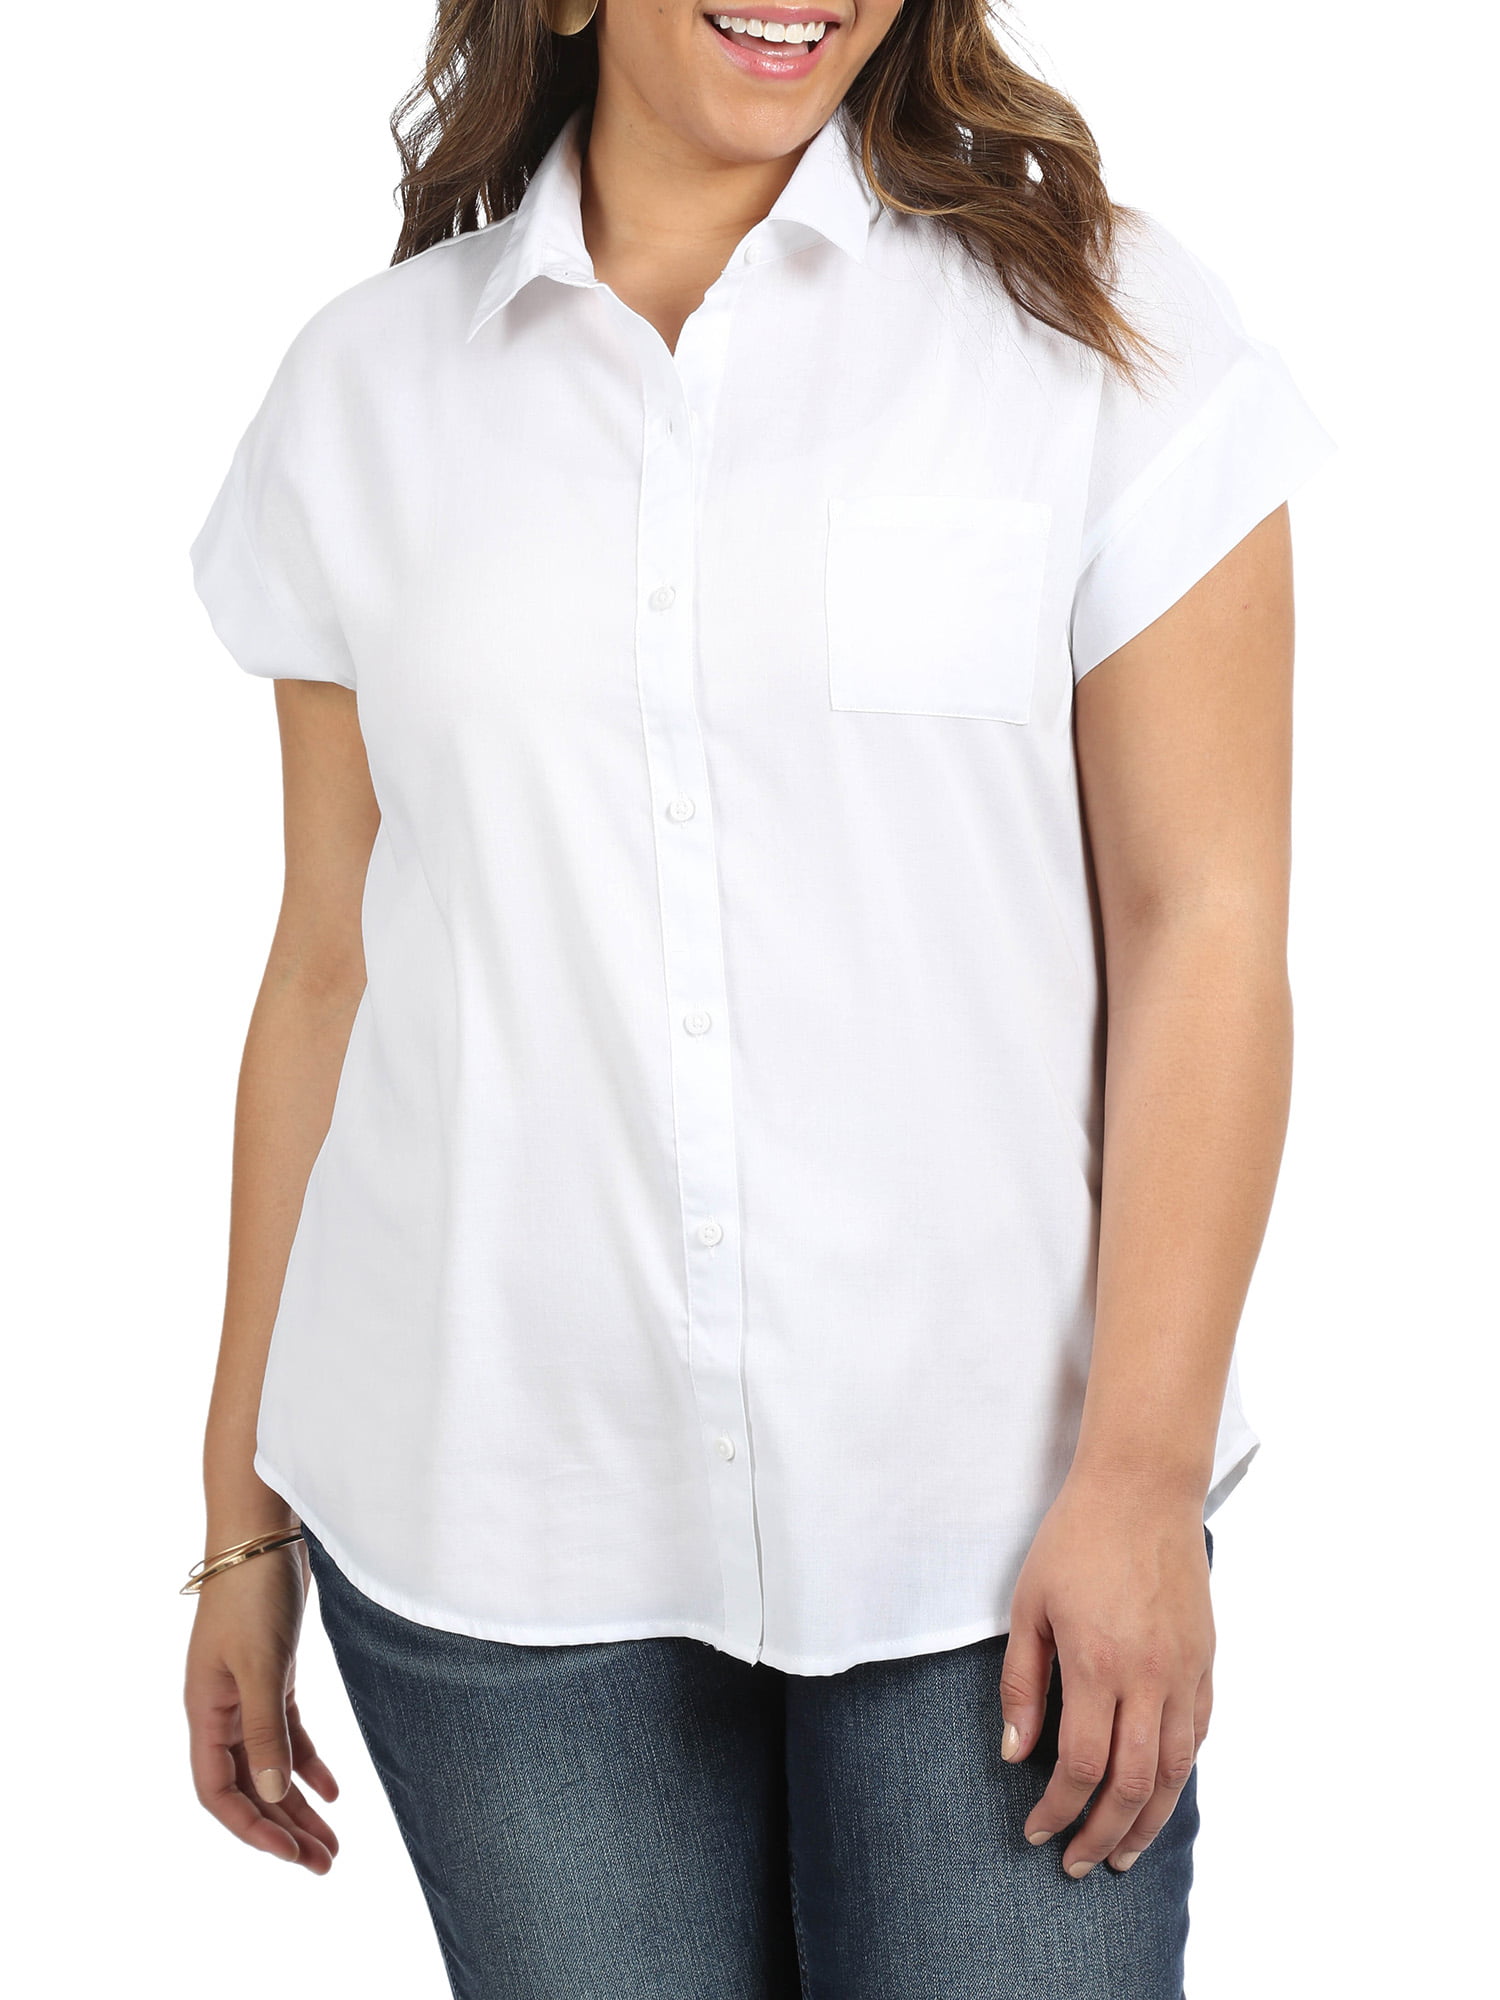 Lee Riders Women's Plus Size Cap Sleeve Button-Front Shirt - Walmart.com